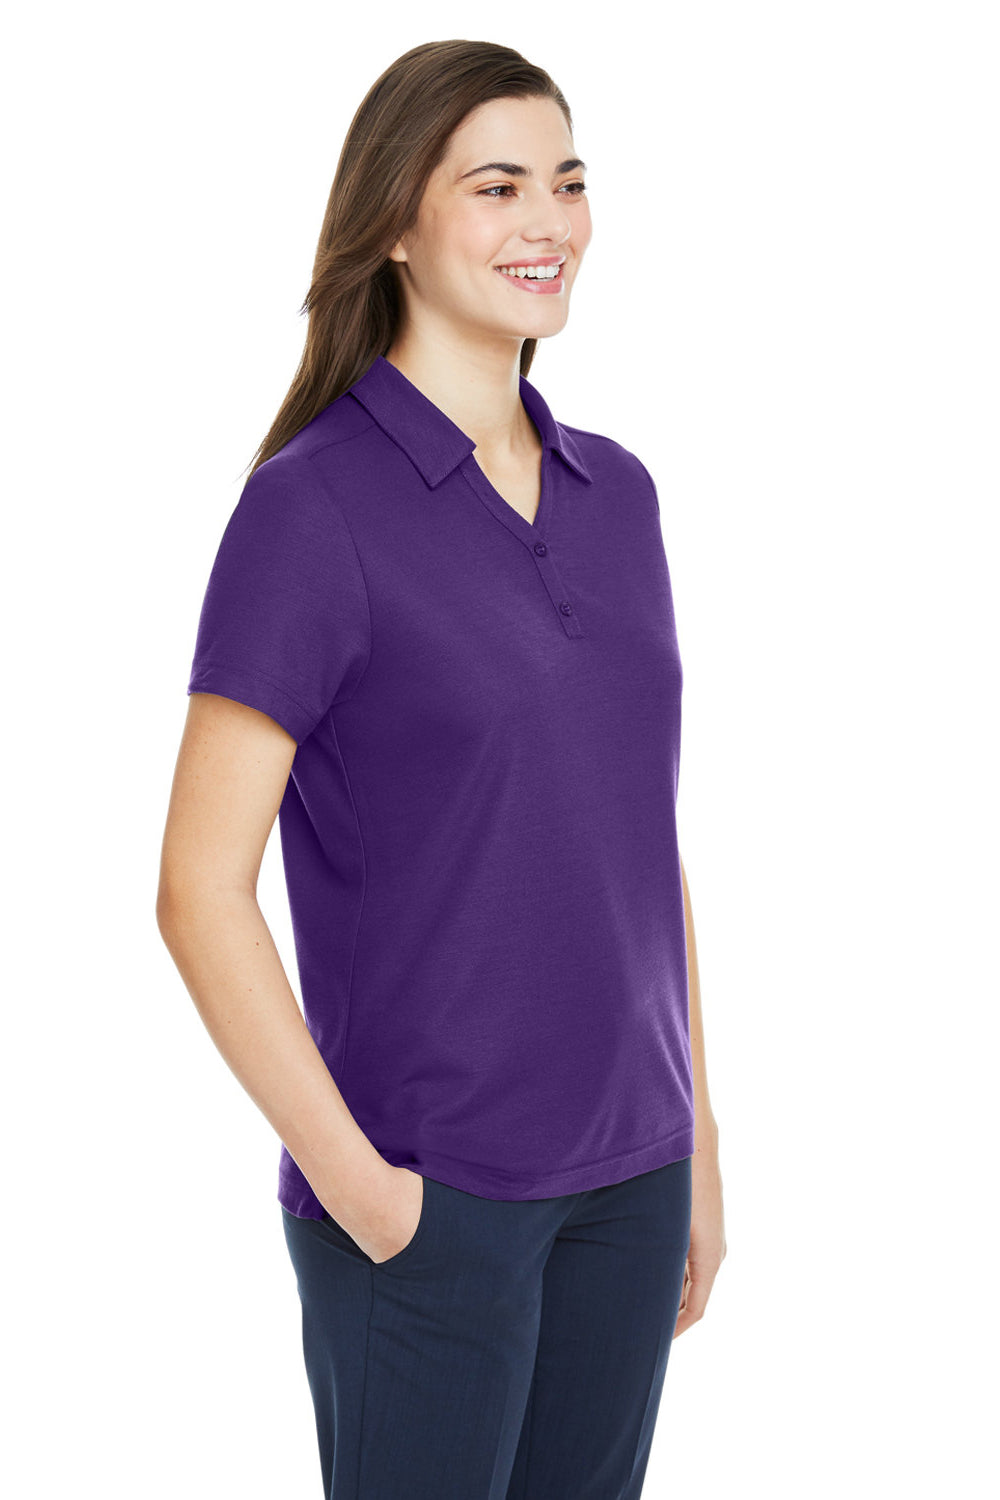 Core 365 CE112W Womens Fusion ChromaSoft Performance Moisture Wicking Pique Short Sleeve Polo Shirt Campus Purple 3Q